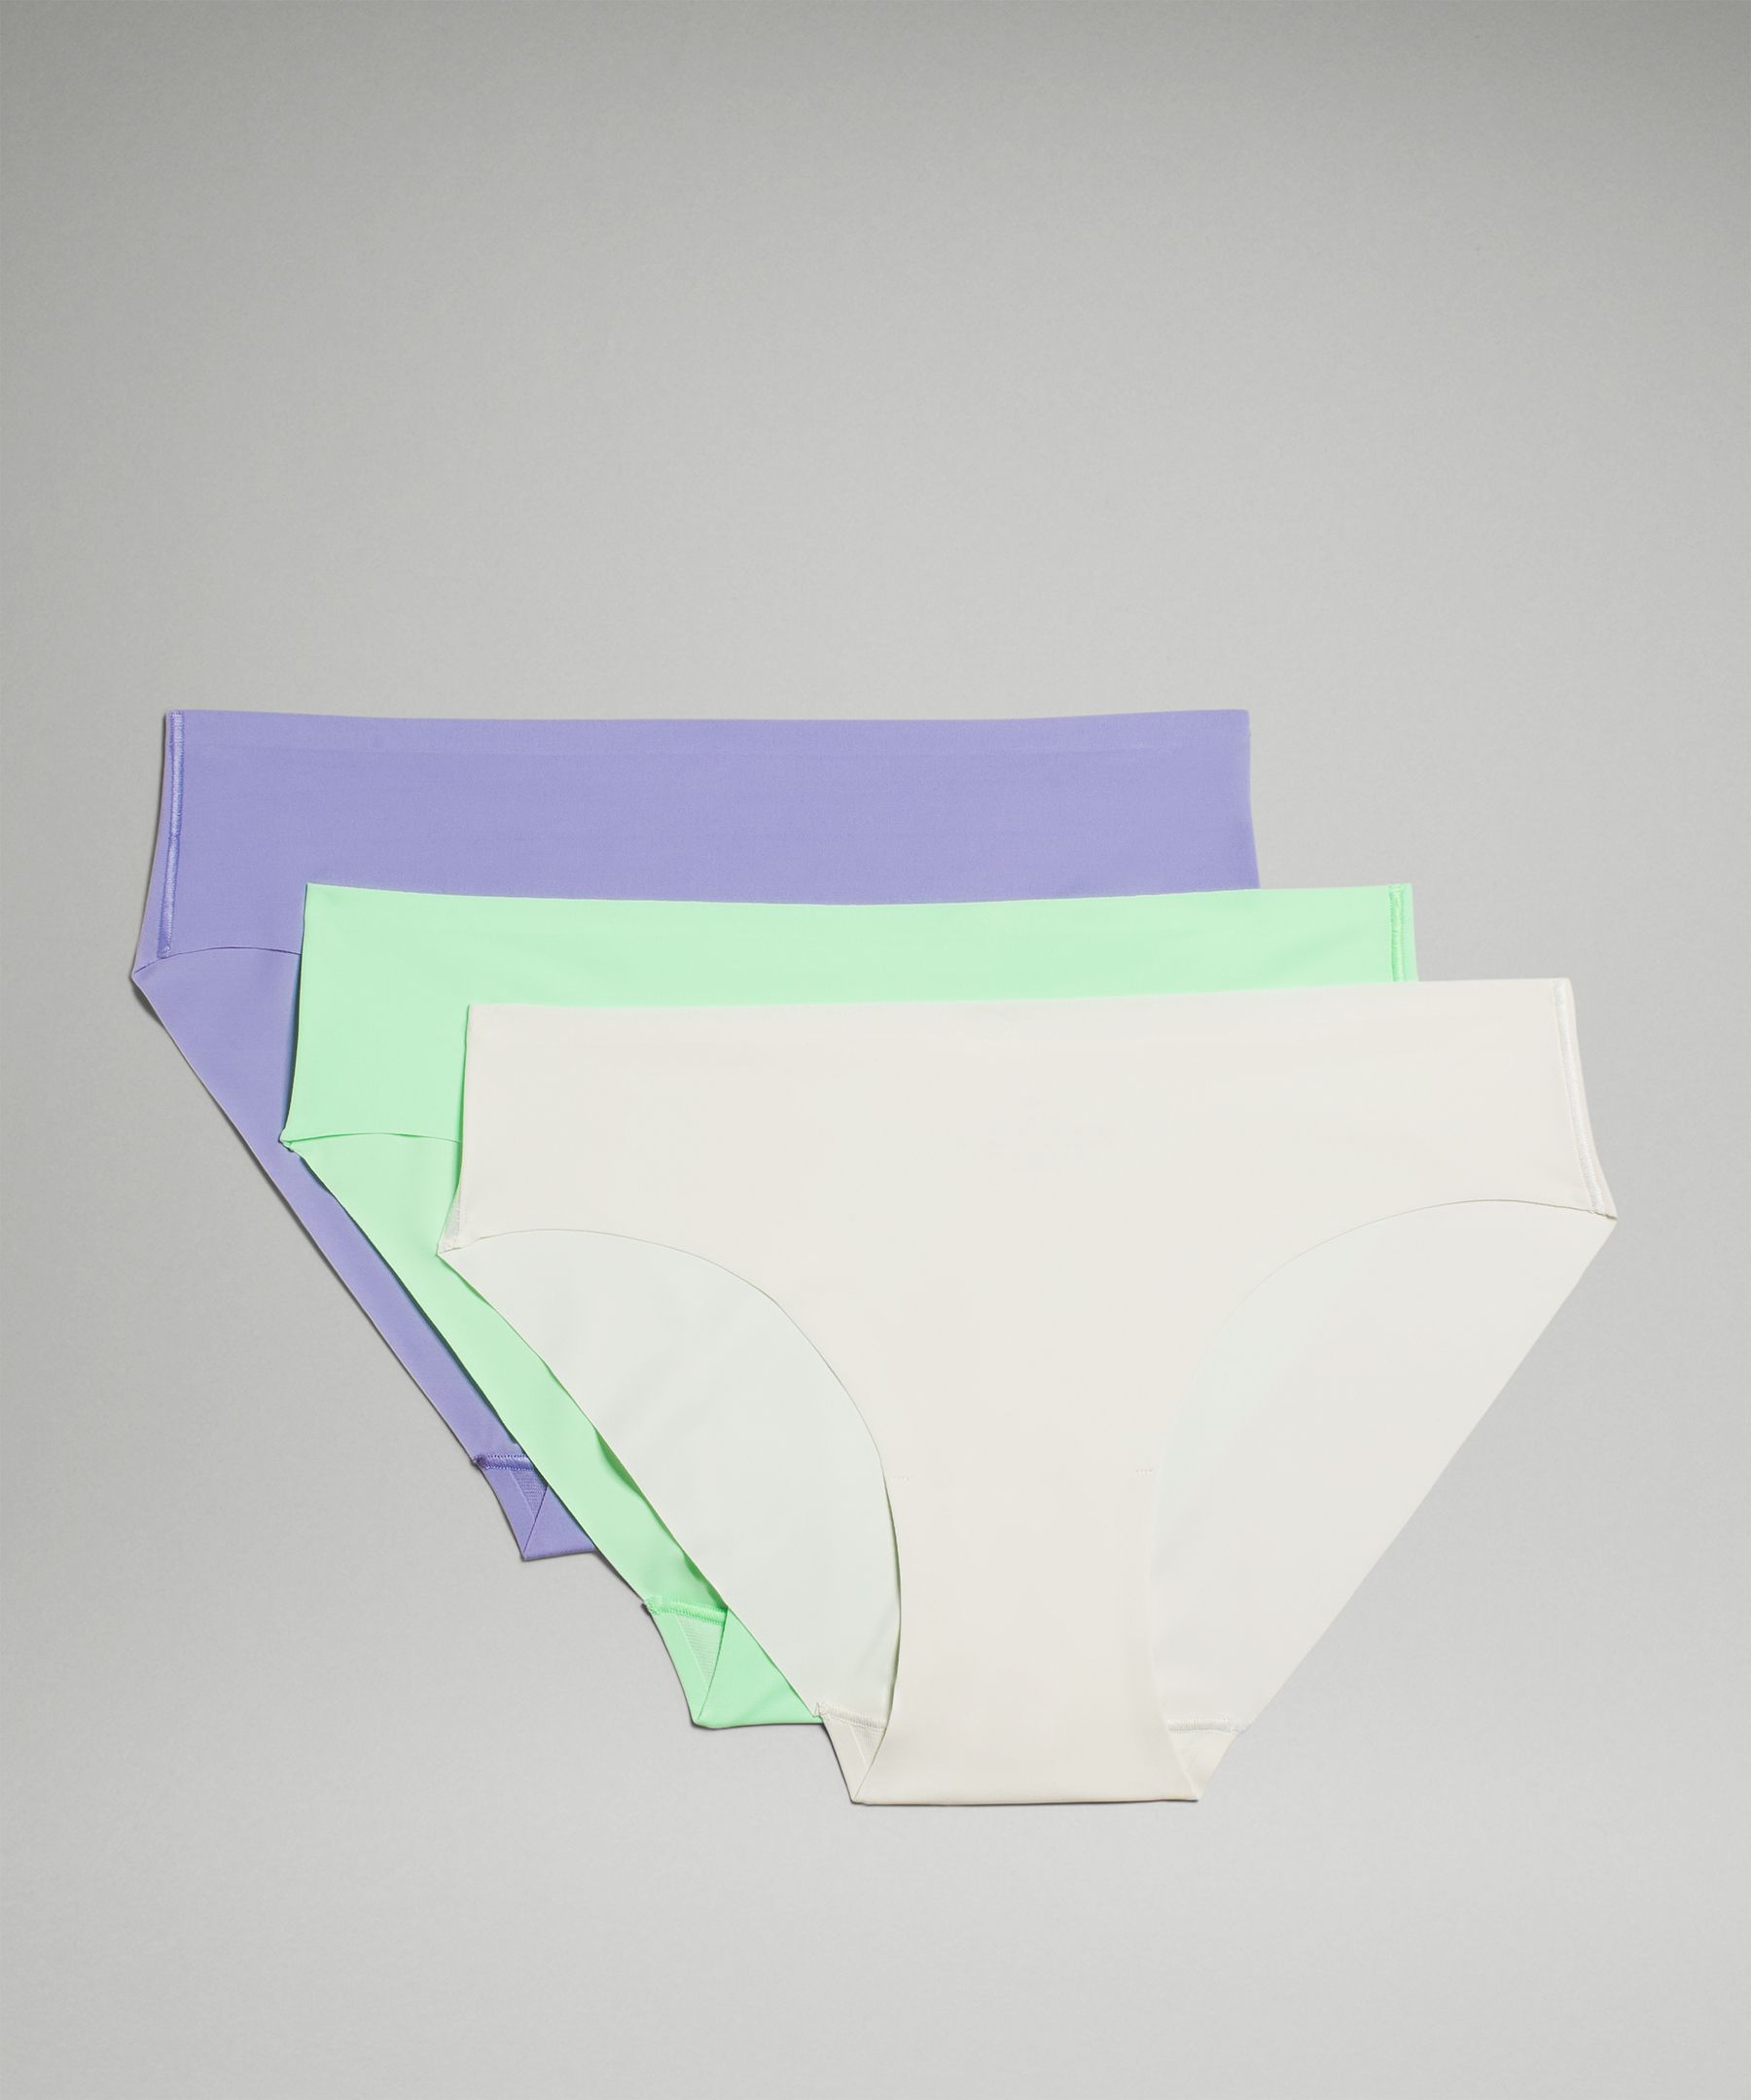 Lululemon Invisiwear Mid-rise Bikini Underwear 3 Pack